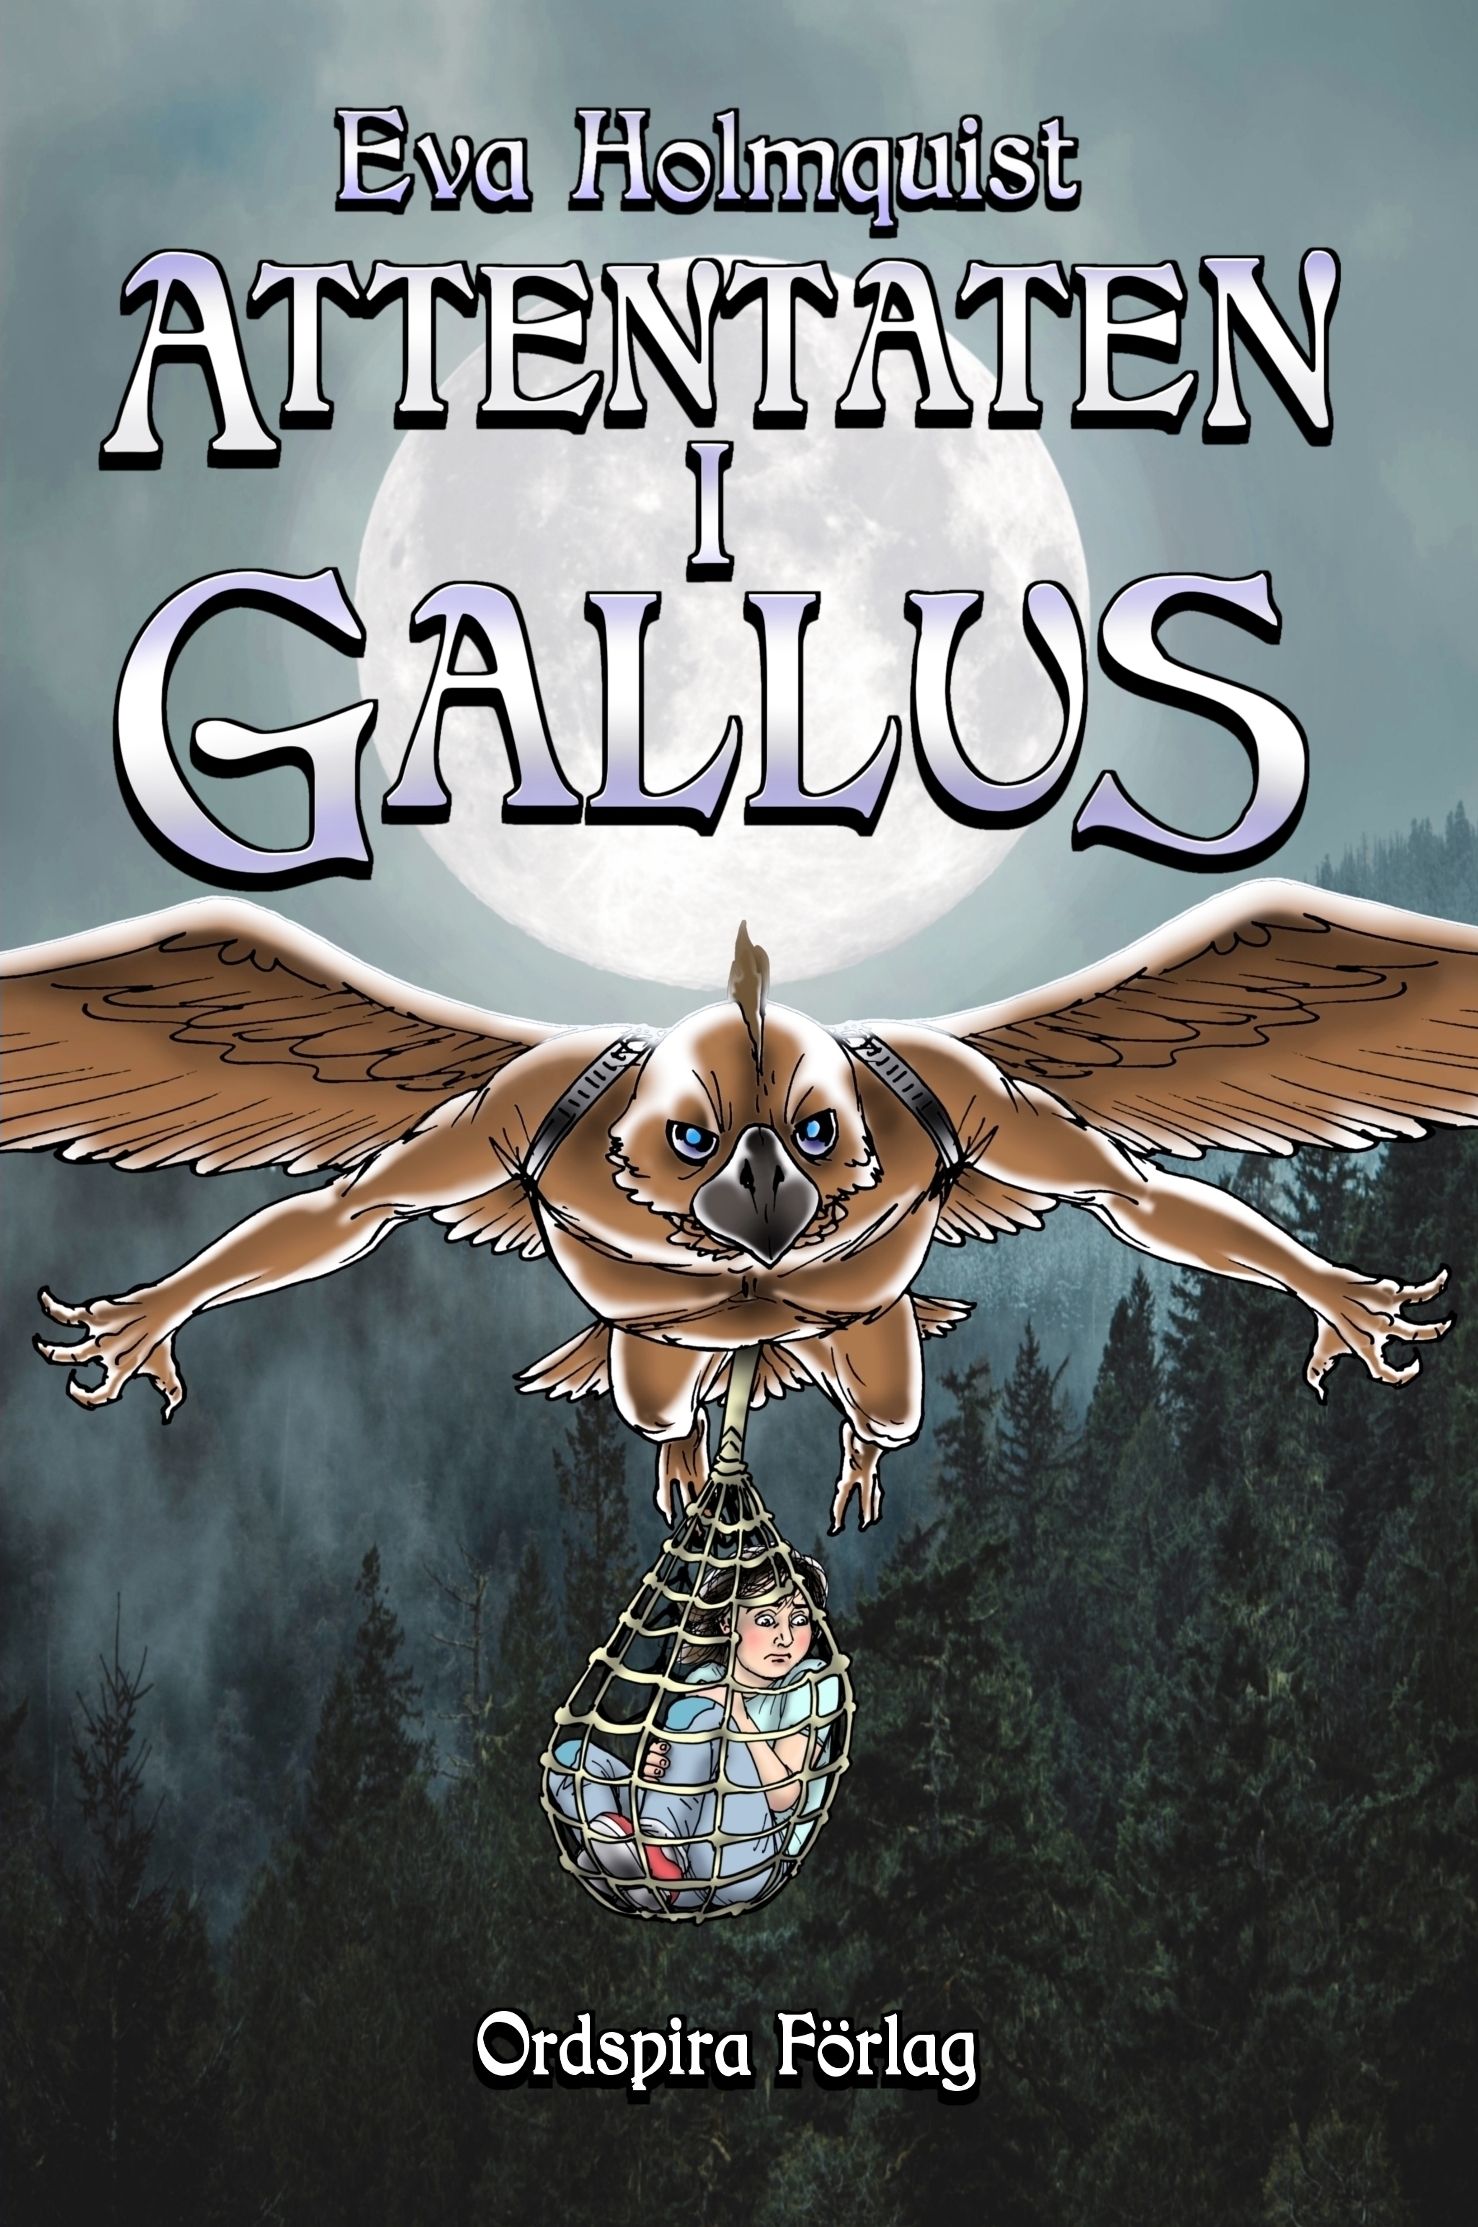 Attentaten i Gallus, e-bog af Eva Holmquist